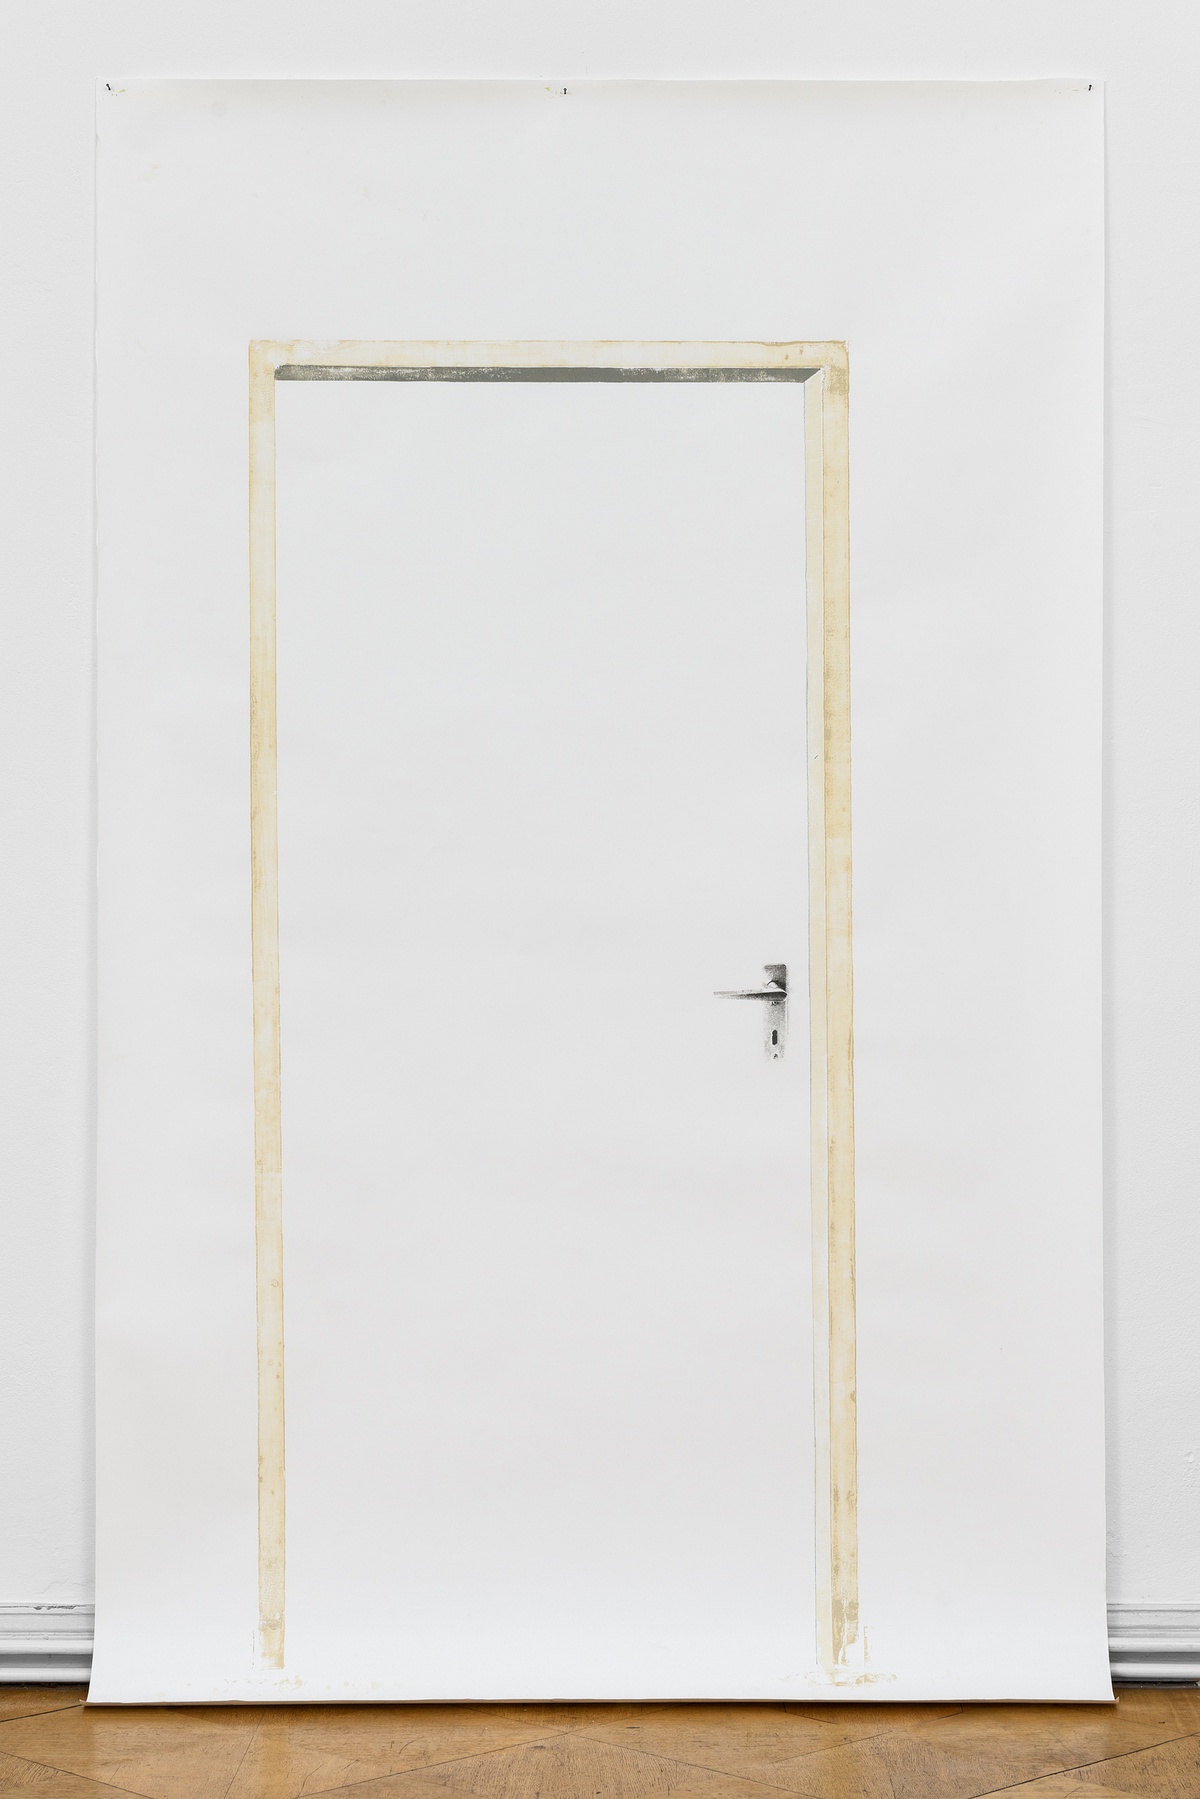 Ariane Müller, Untitled (3/16), 2017print, image transfer245 x 145 cm (print 200 x 90 cm)